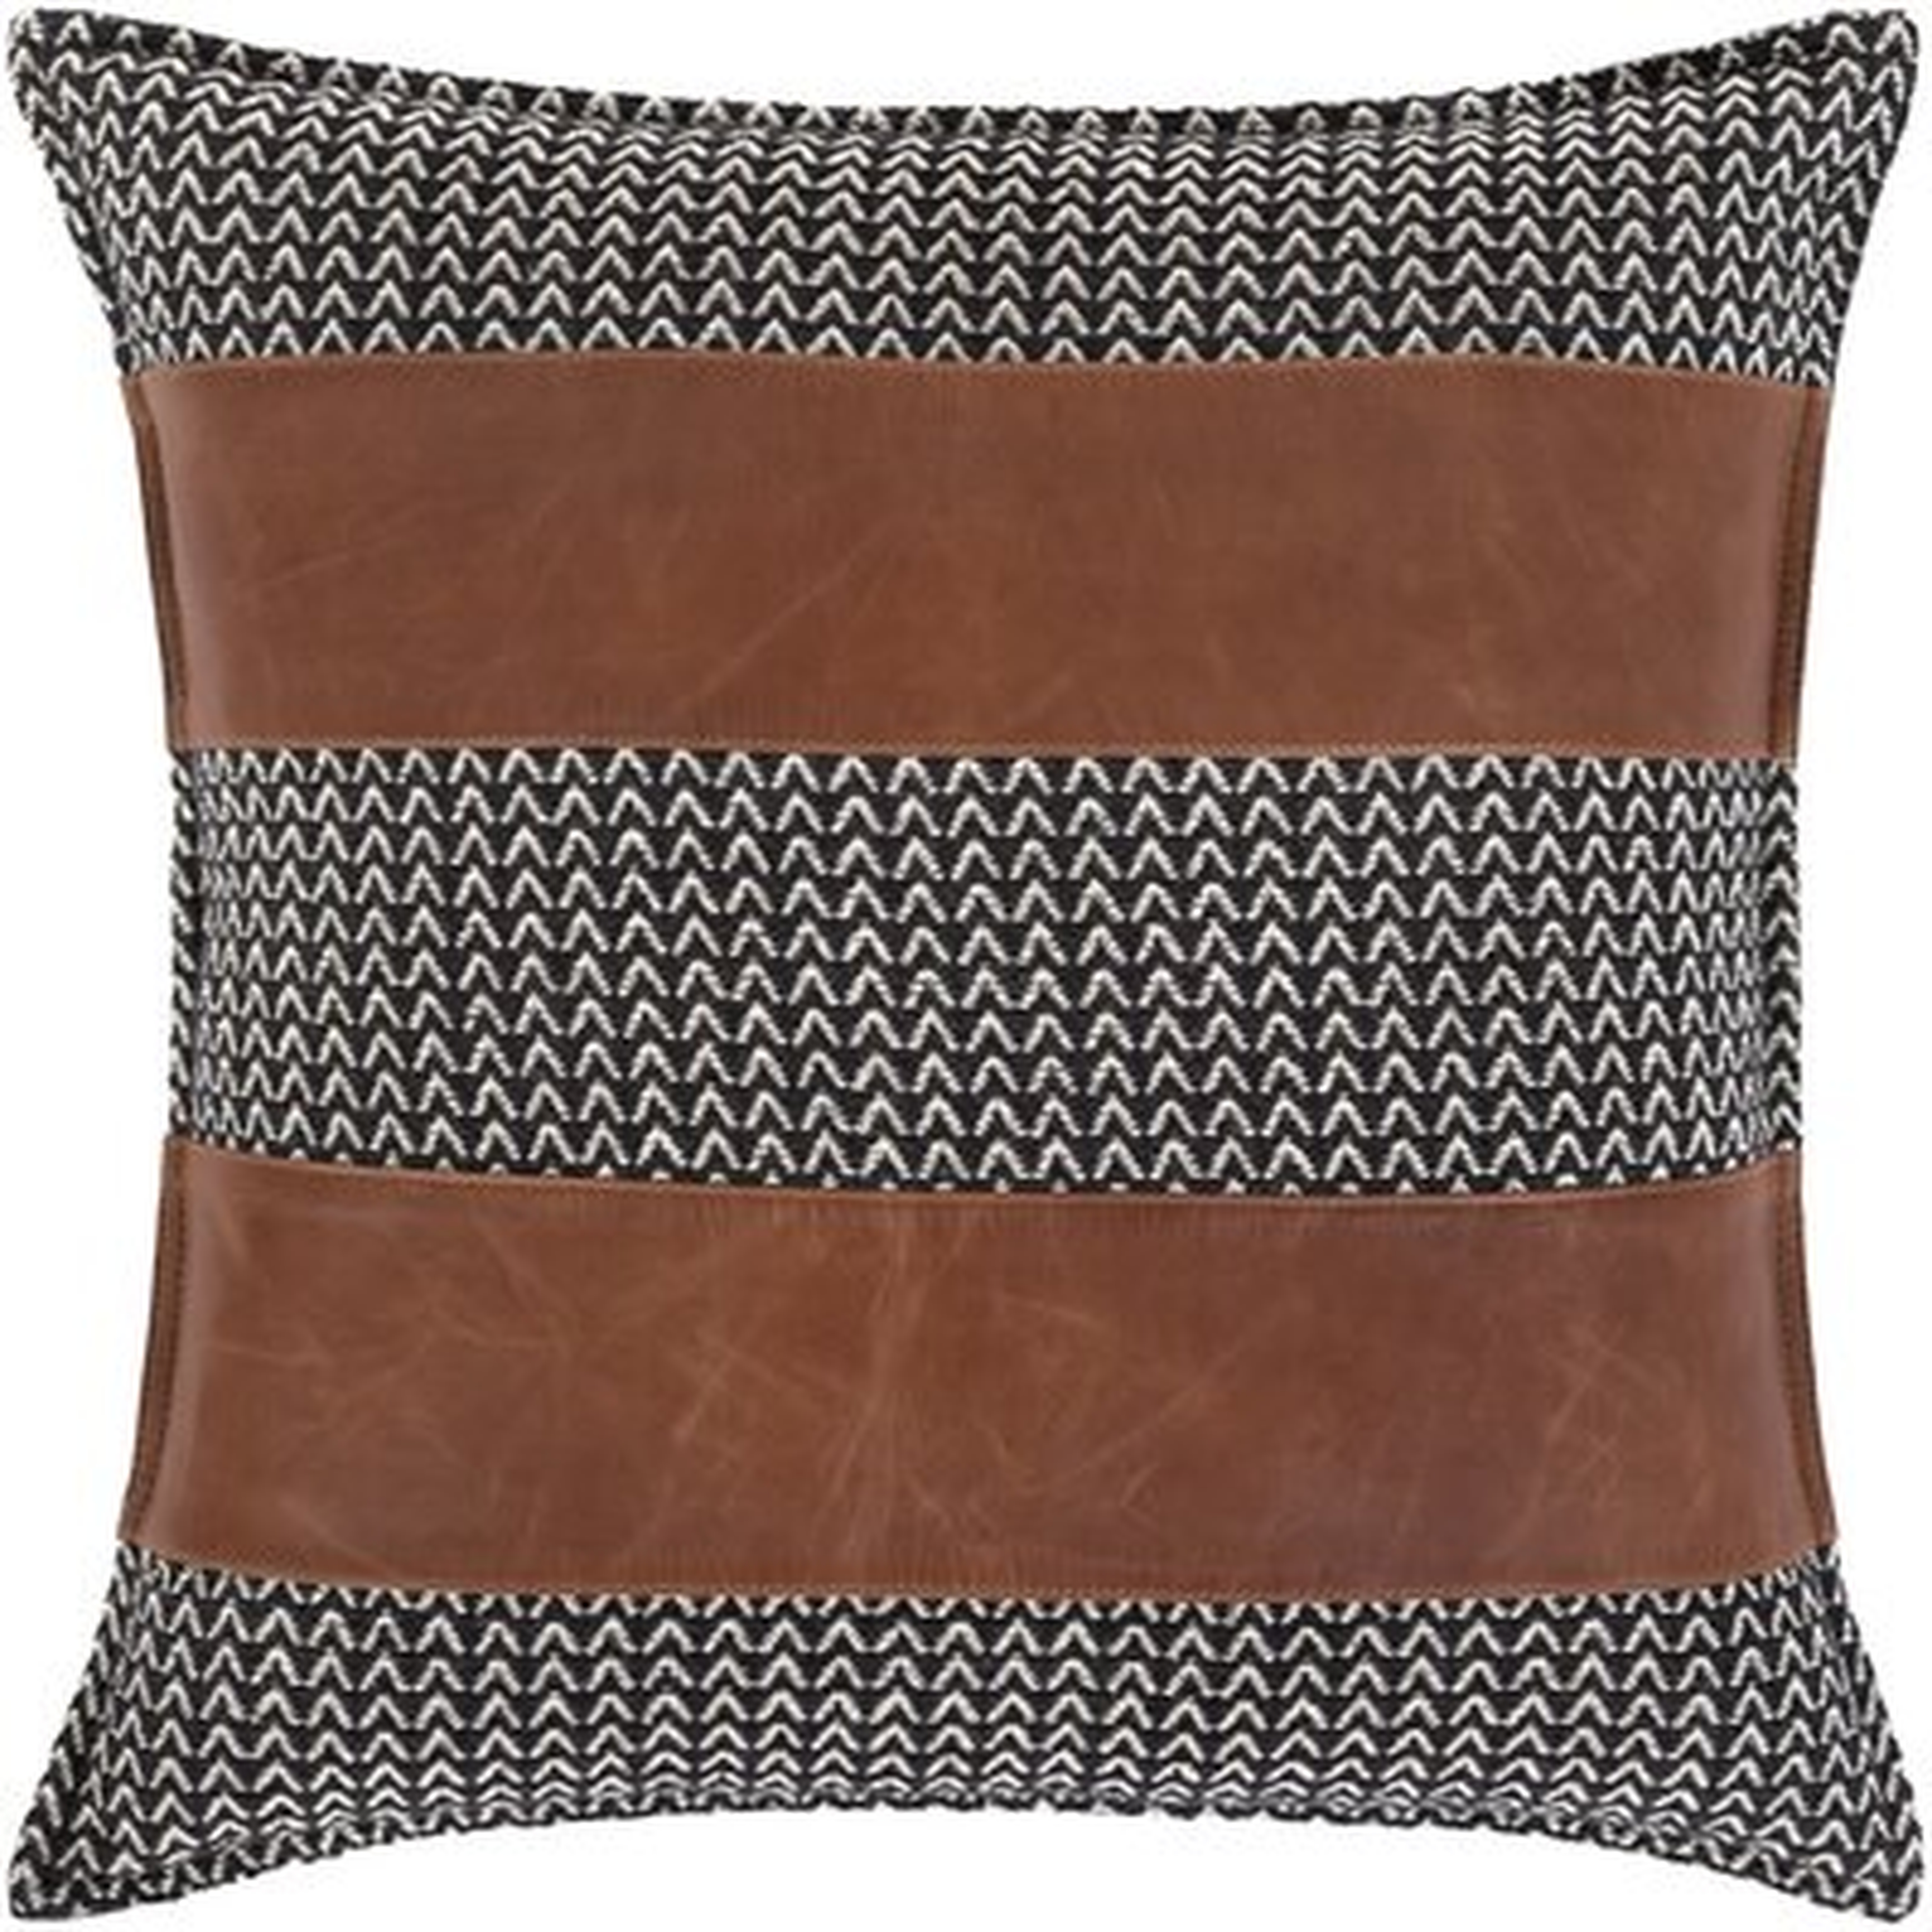 Rohde Throw Pillow Cover - Wayfair